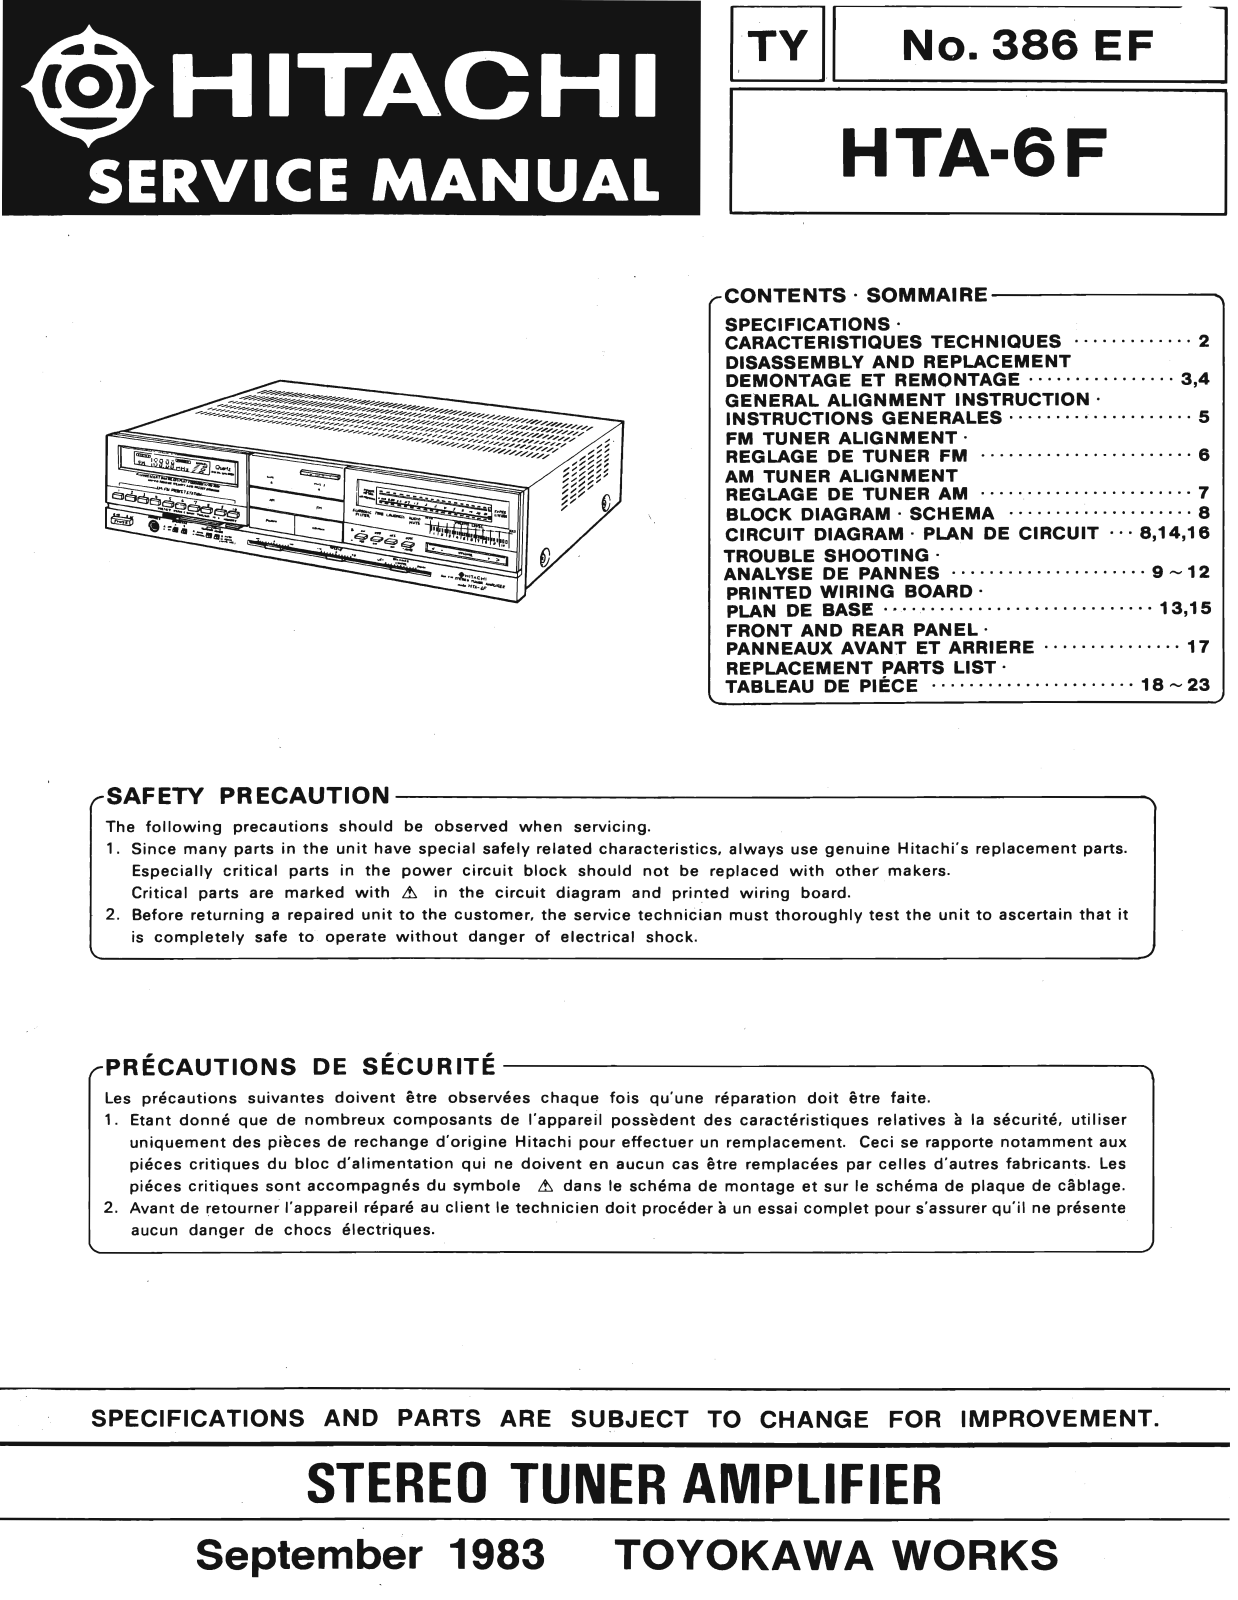 Hitachi HT-A6-F Service Manual